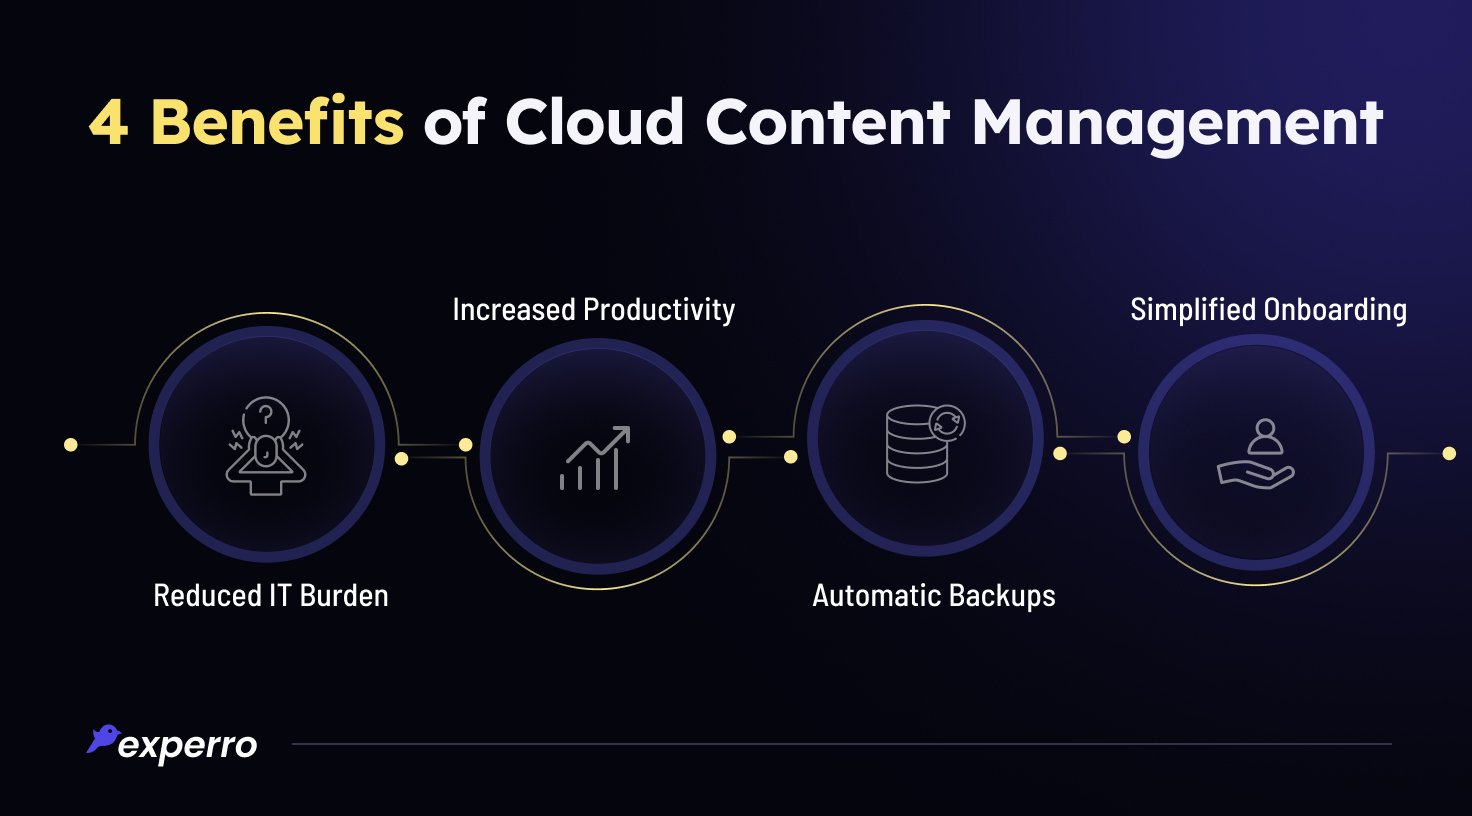 Benefits of Cloud Content Management